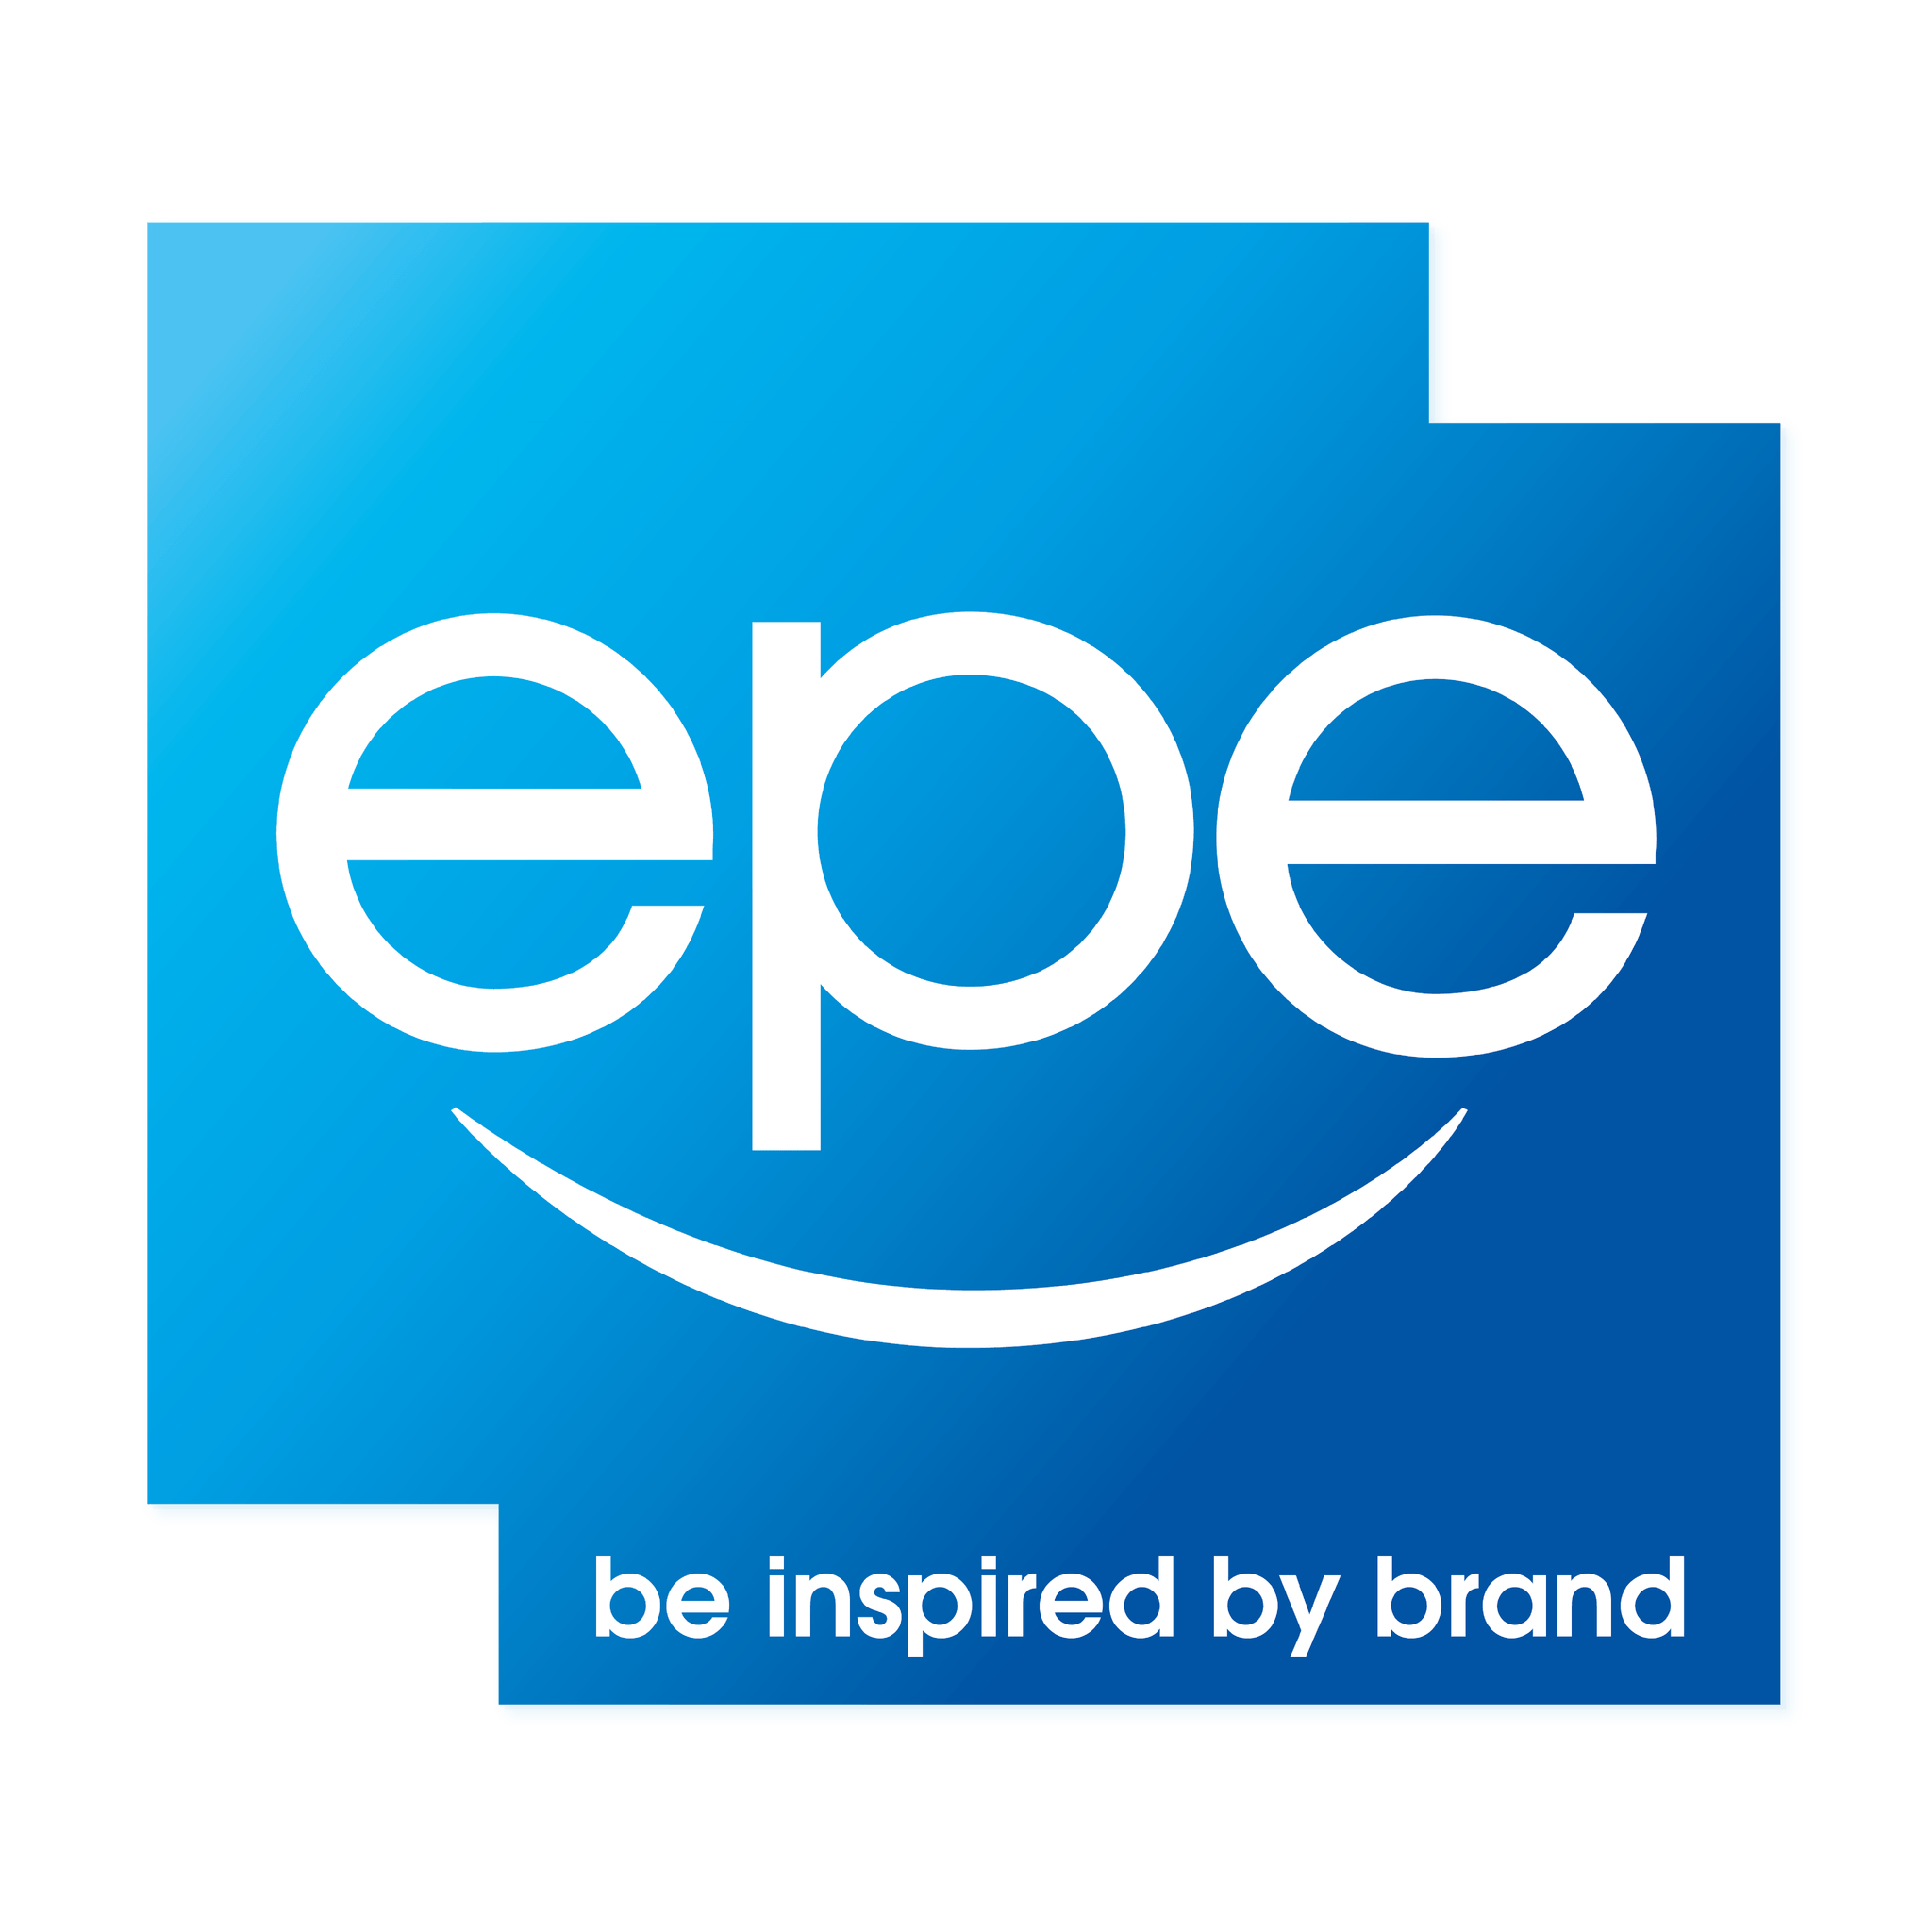 EPE International Ltd